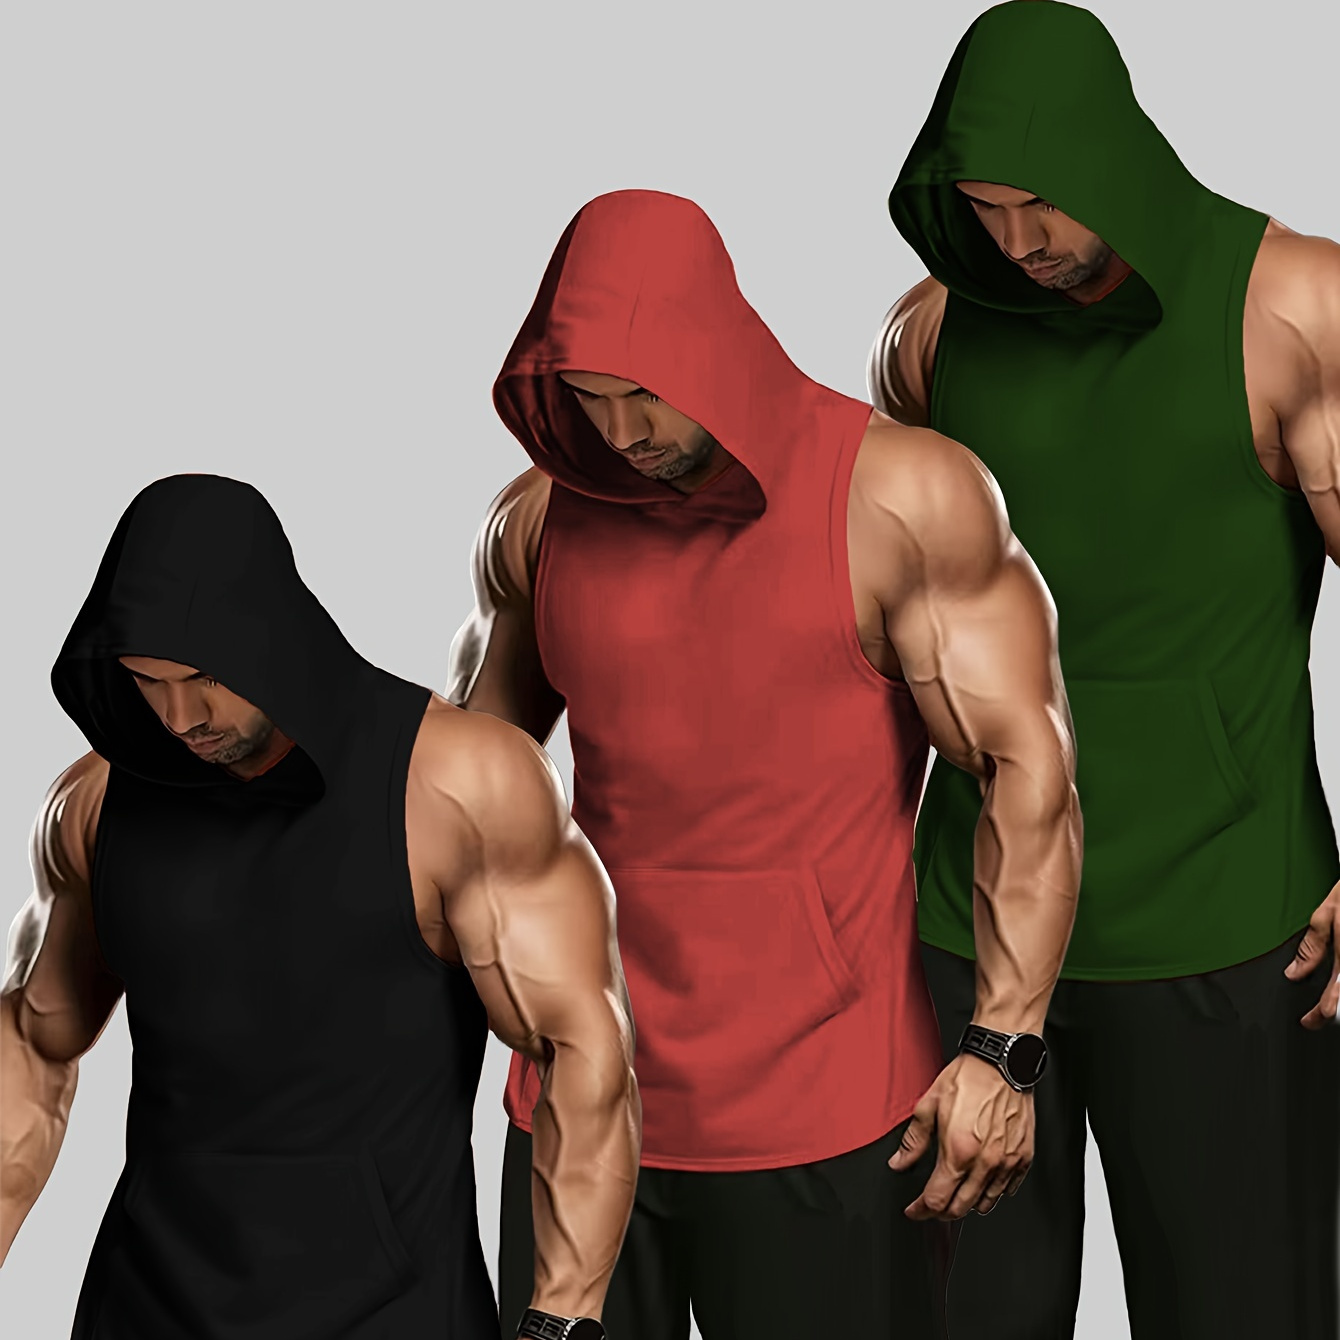 

3pcs Tanktop Set, Solid Men's Casual Comfy Vest Shirts For Summer, Men's Clothing Workout Vest Tshirt Top